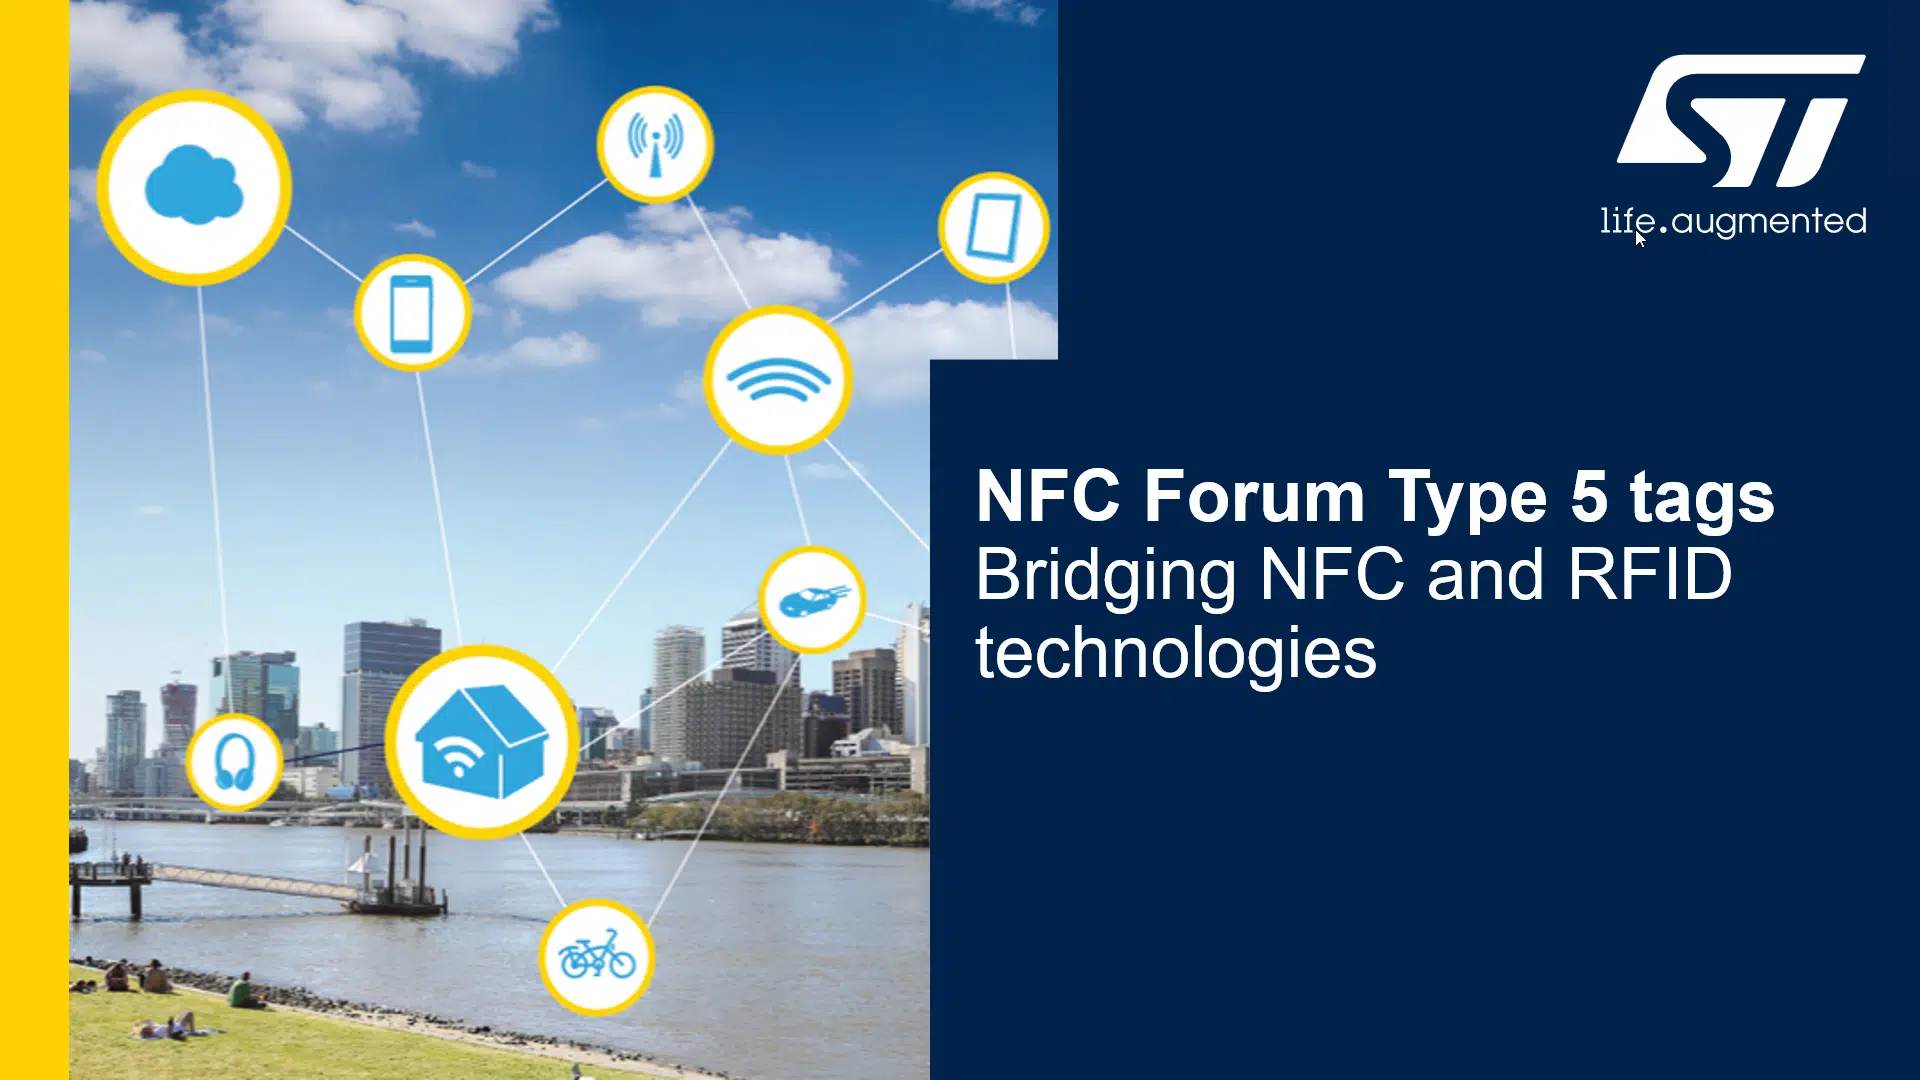 ST NFC Forum Type 5 tags webinar